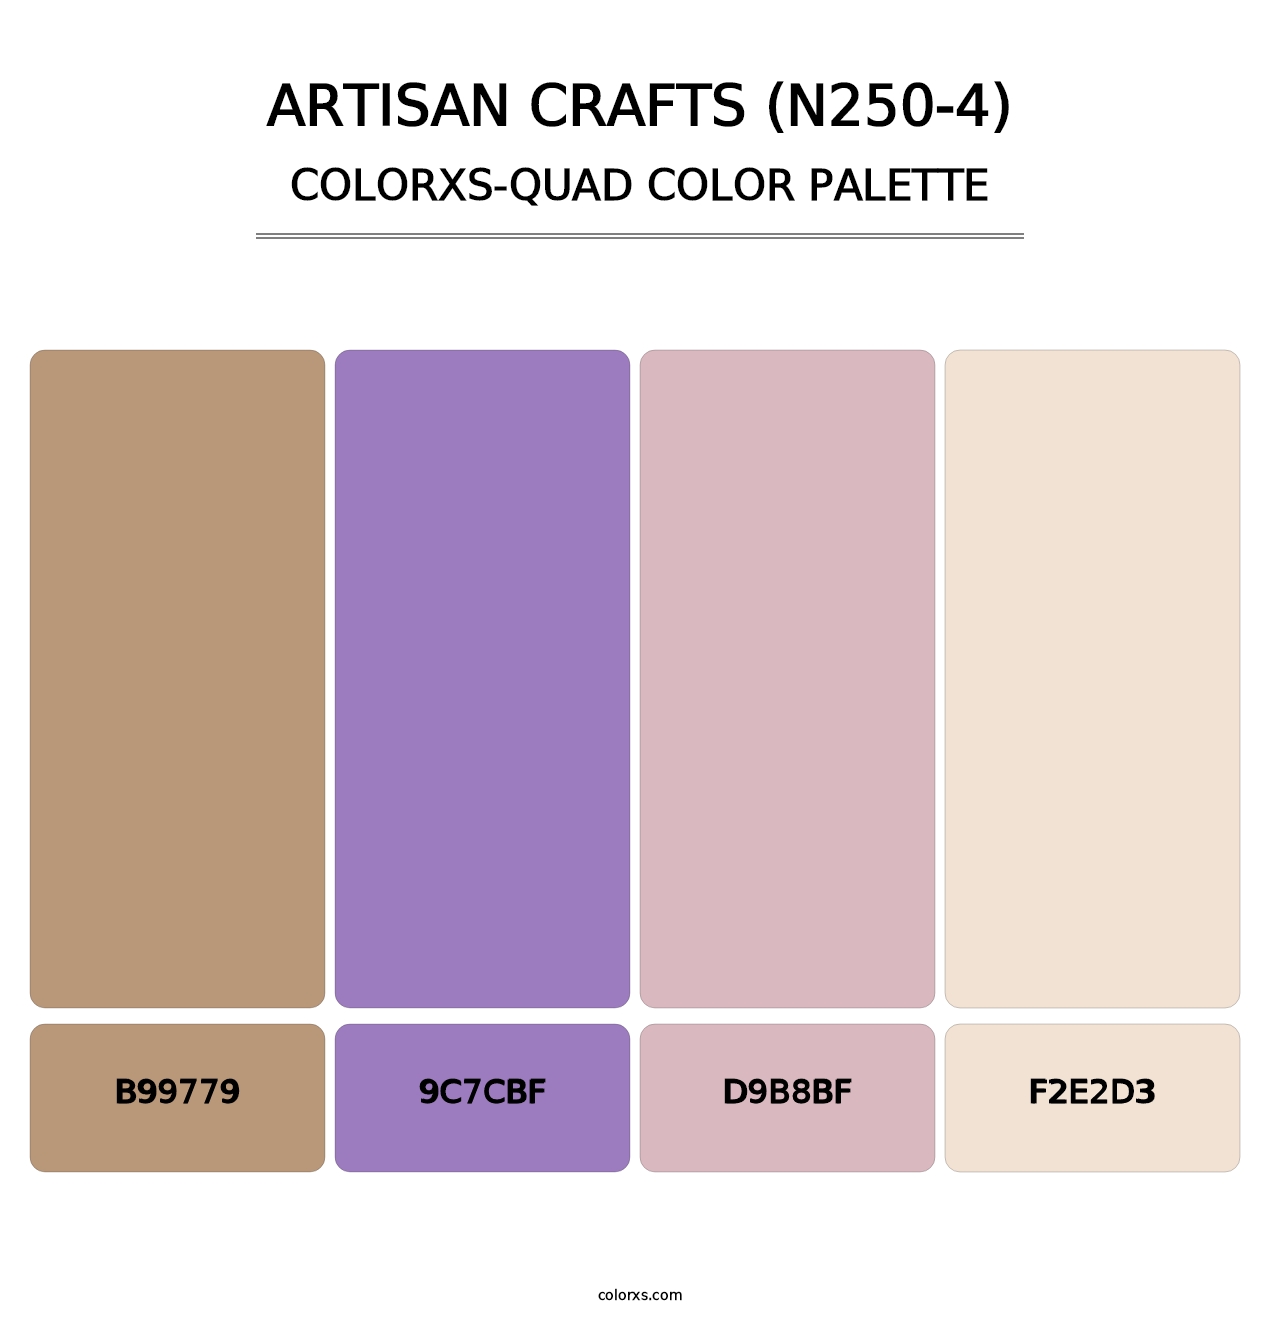 Artisan Crafts (N250-4) - Colorxs Quad Palette